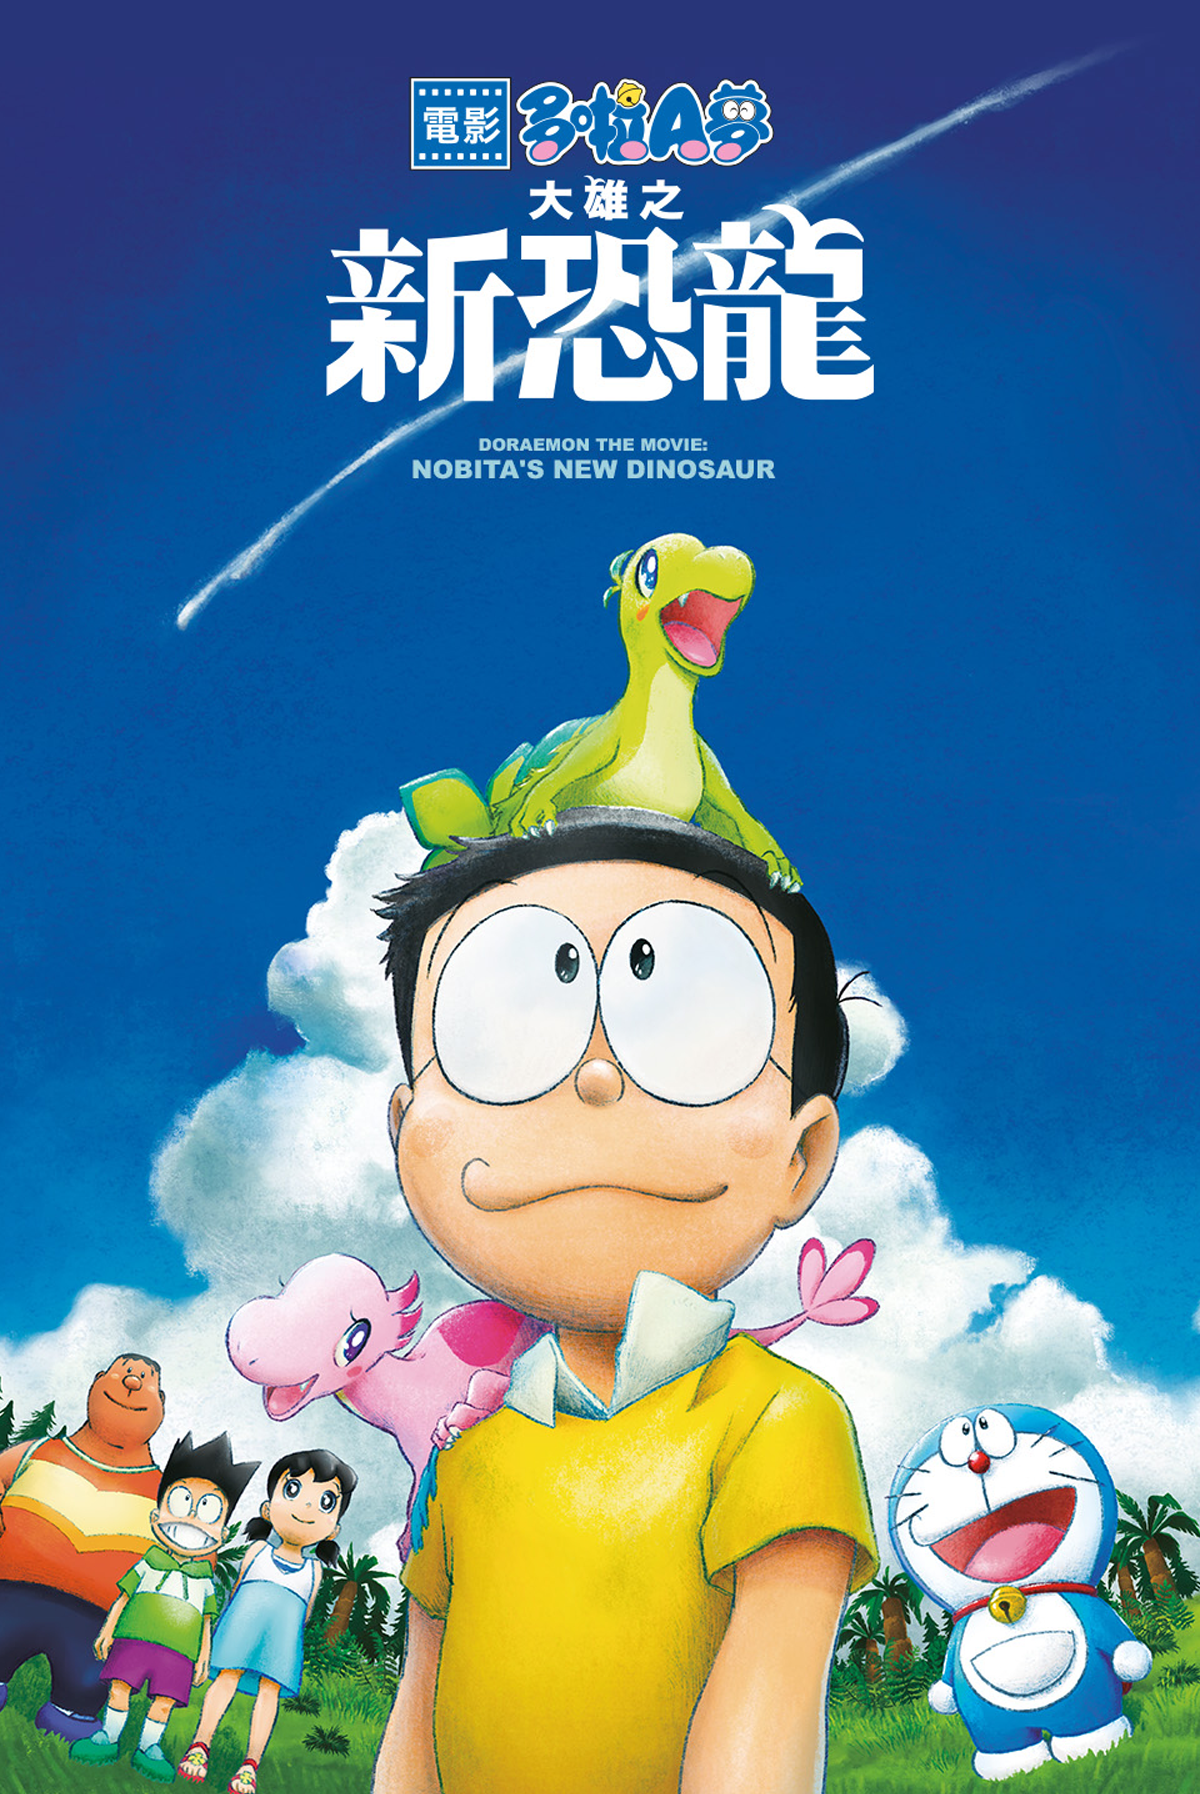 Now Player - Doraemon the Movie: Nobita's New Dinosaur